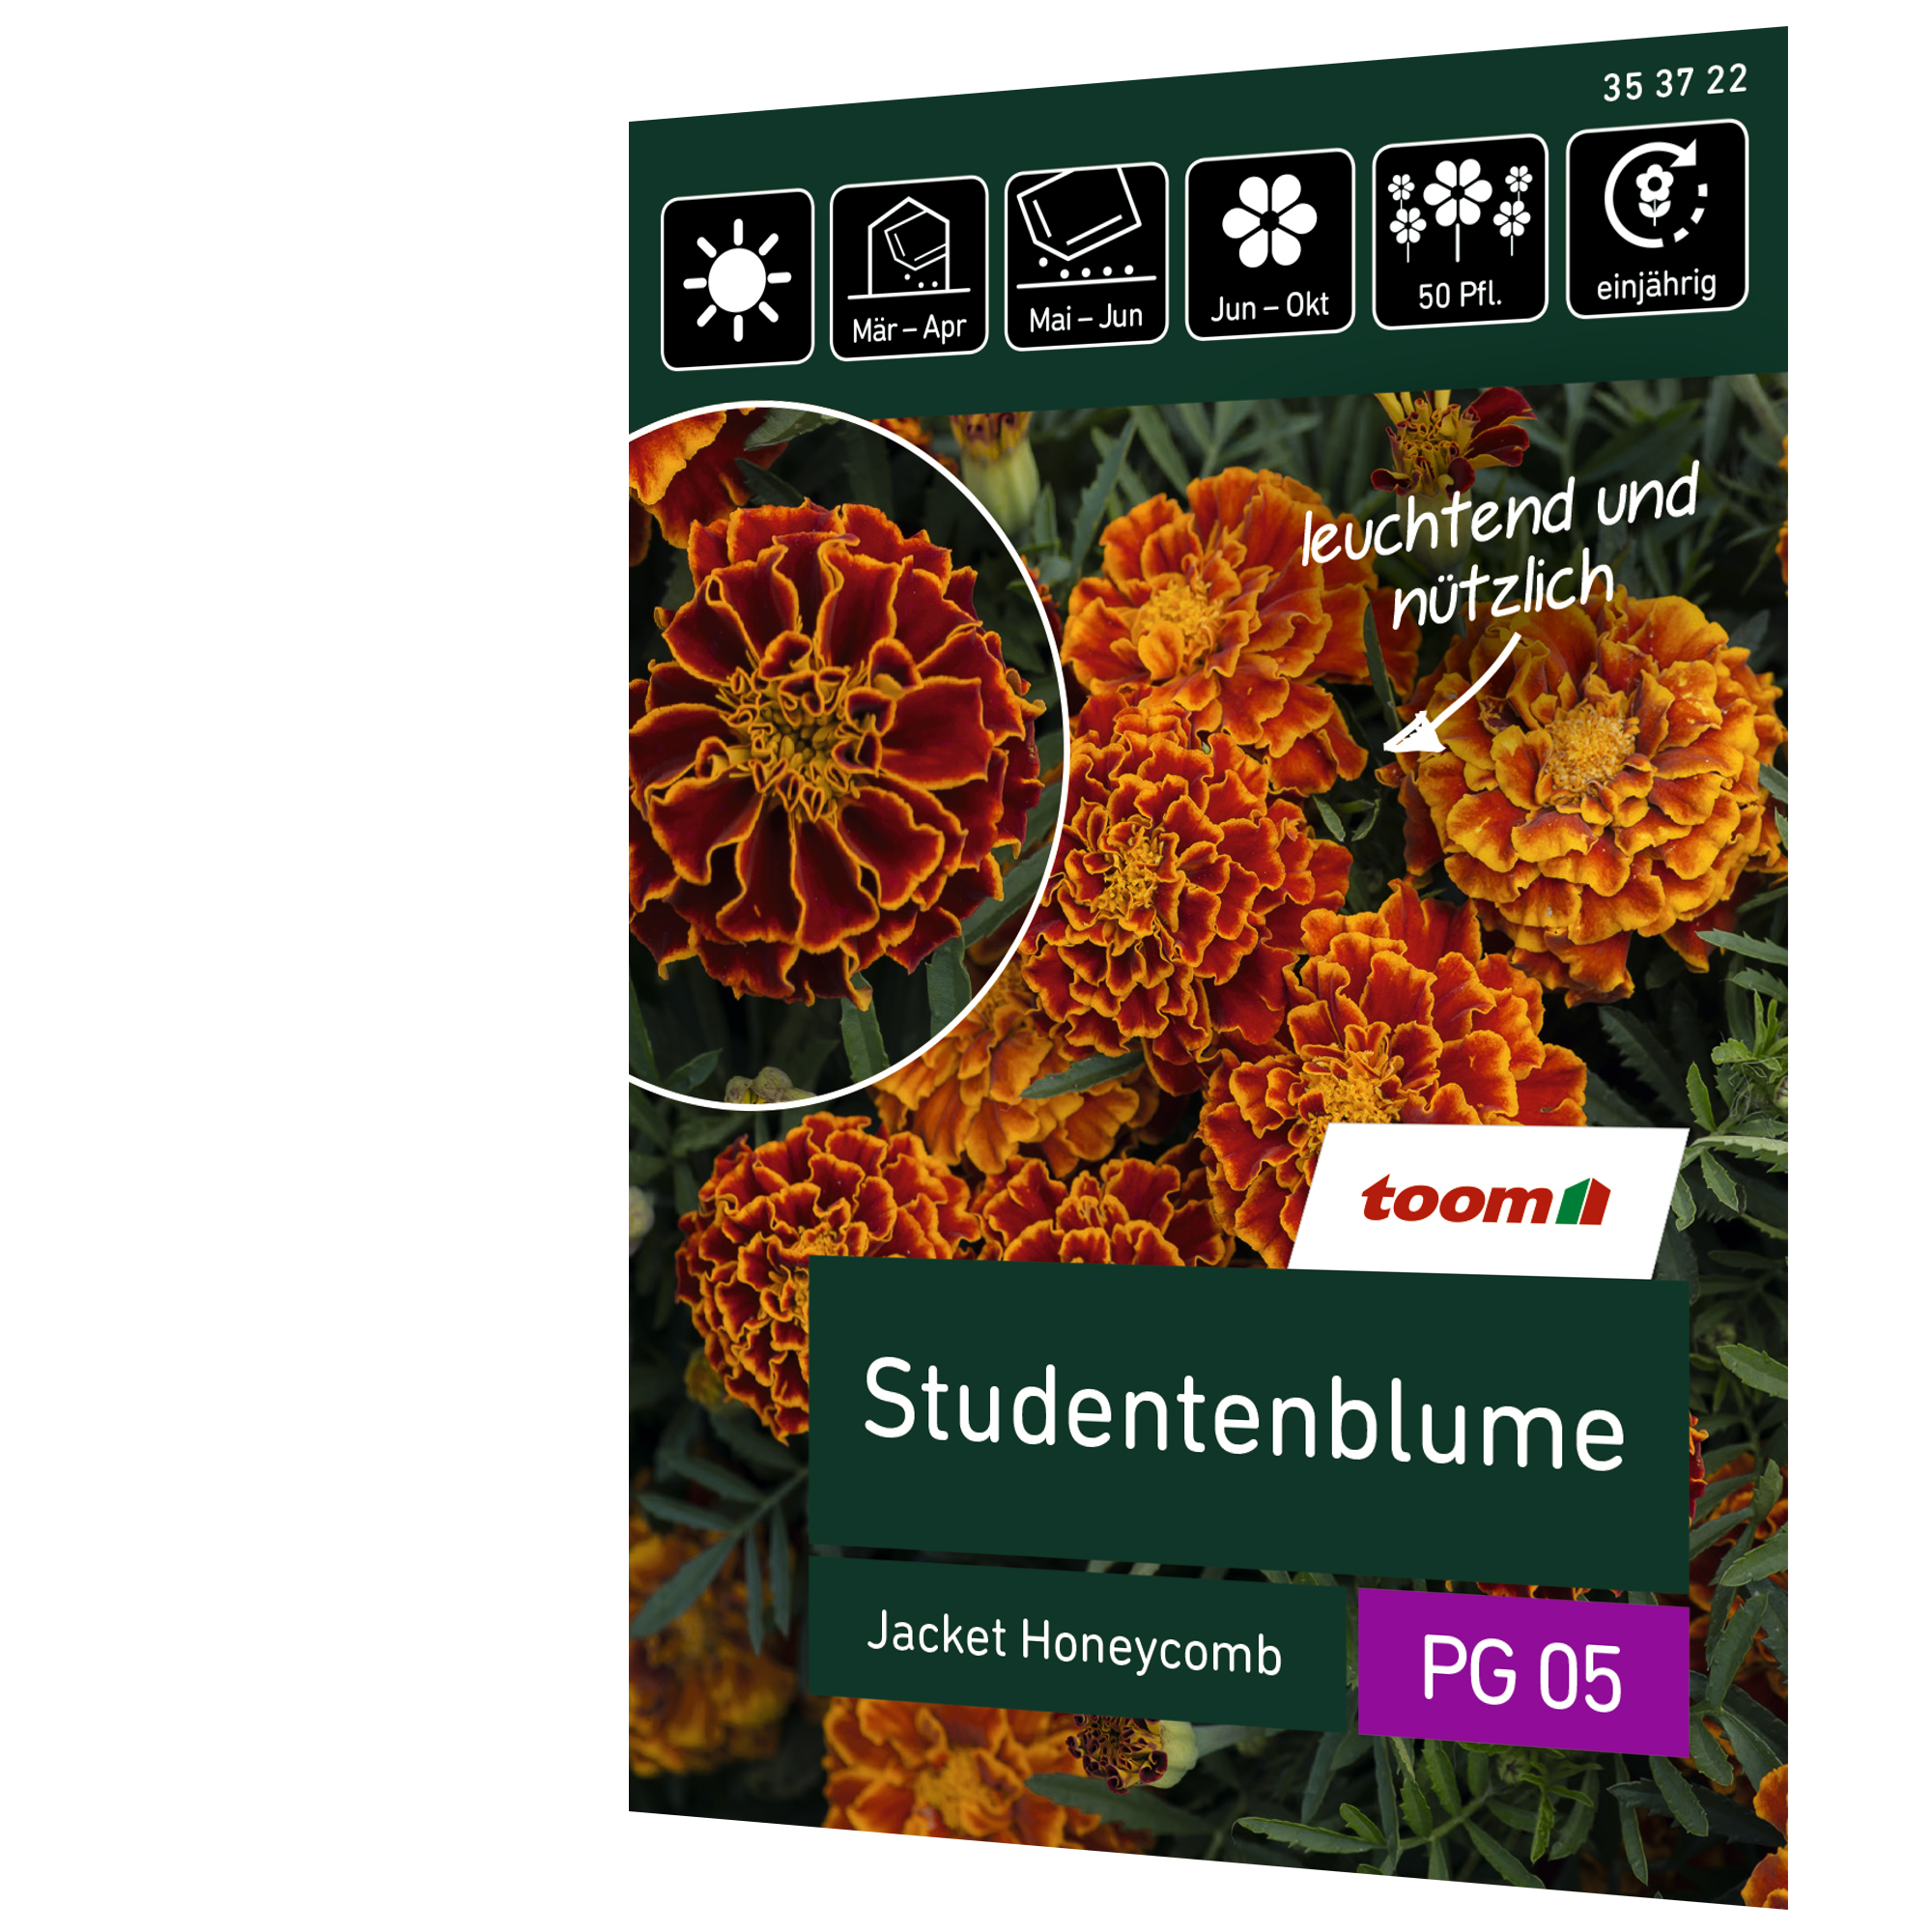 Studentenblume 'Jacket Honeycomb' + product picture